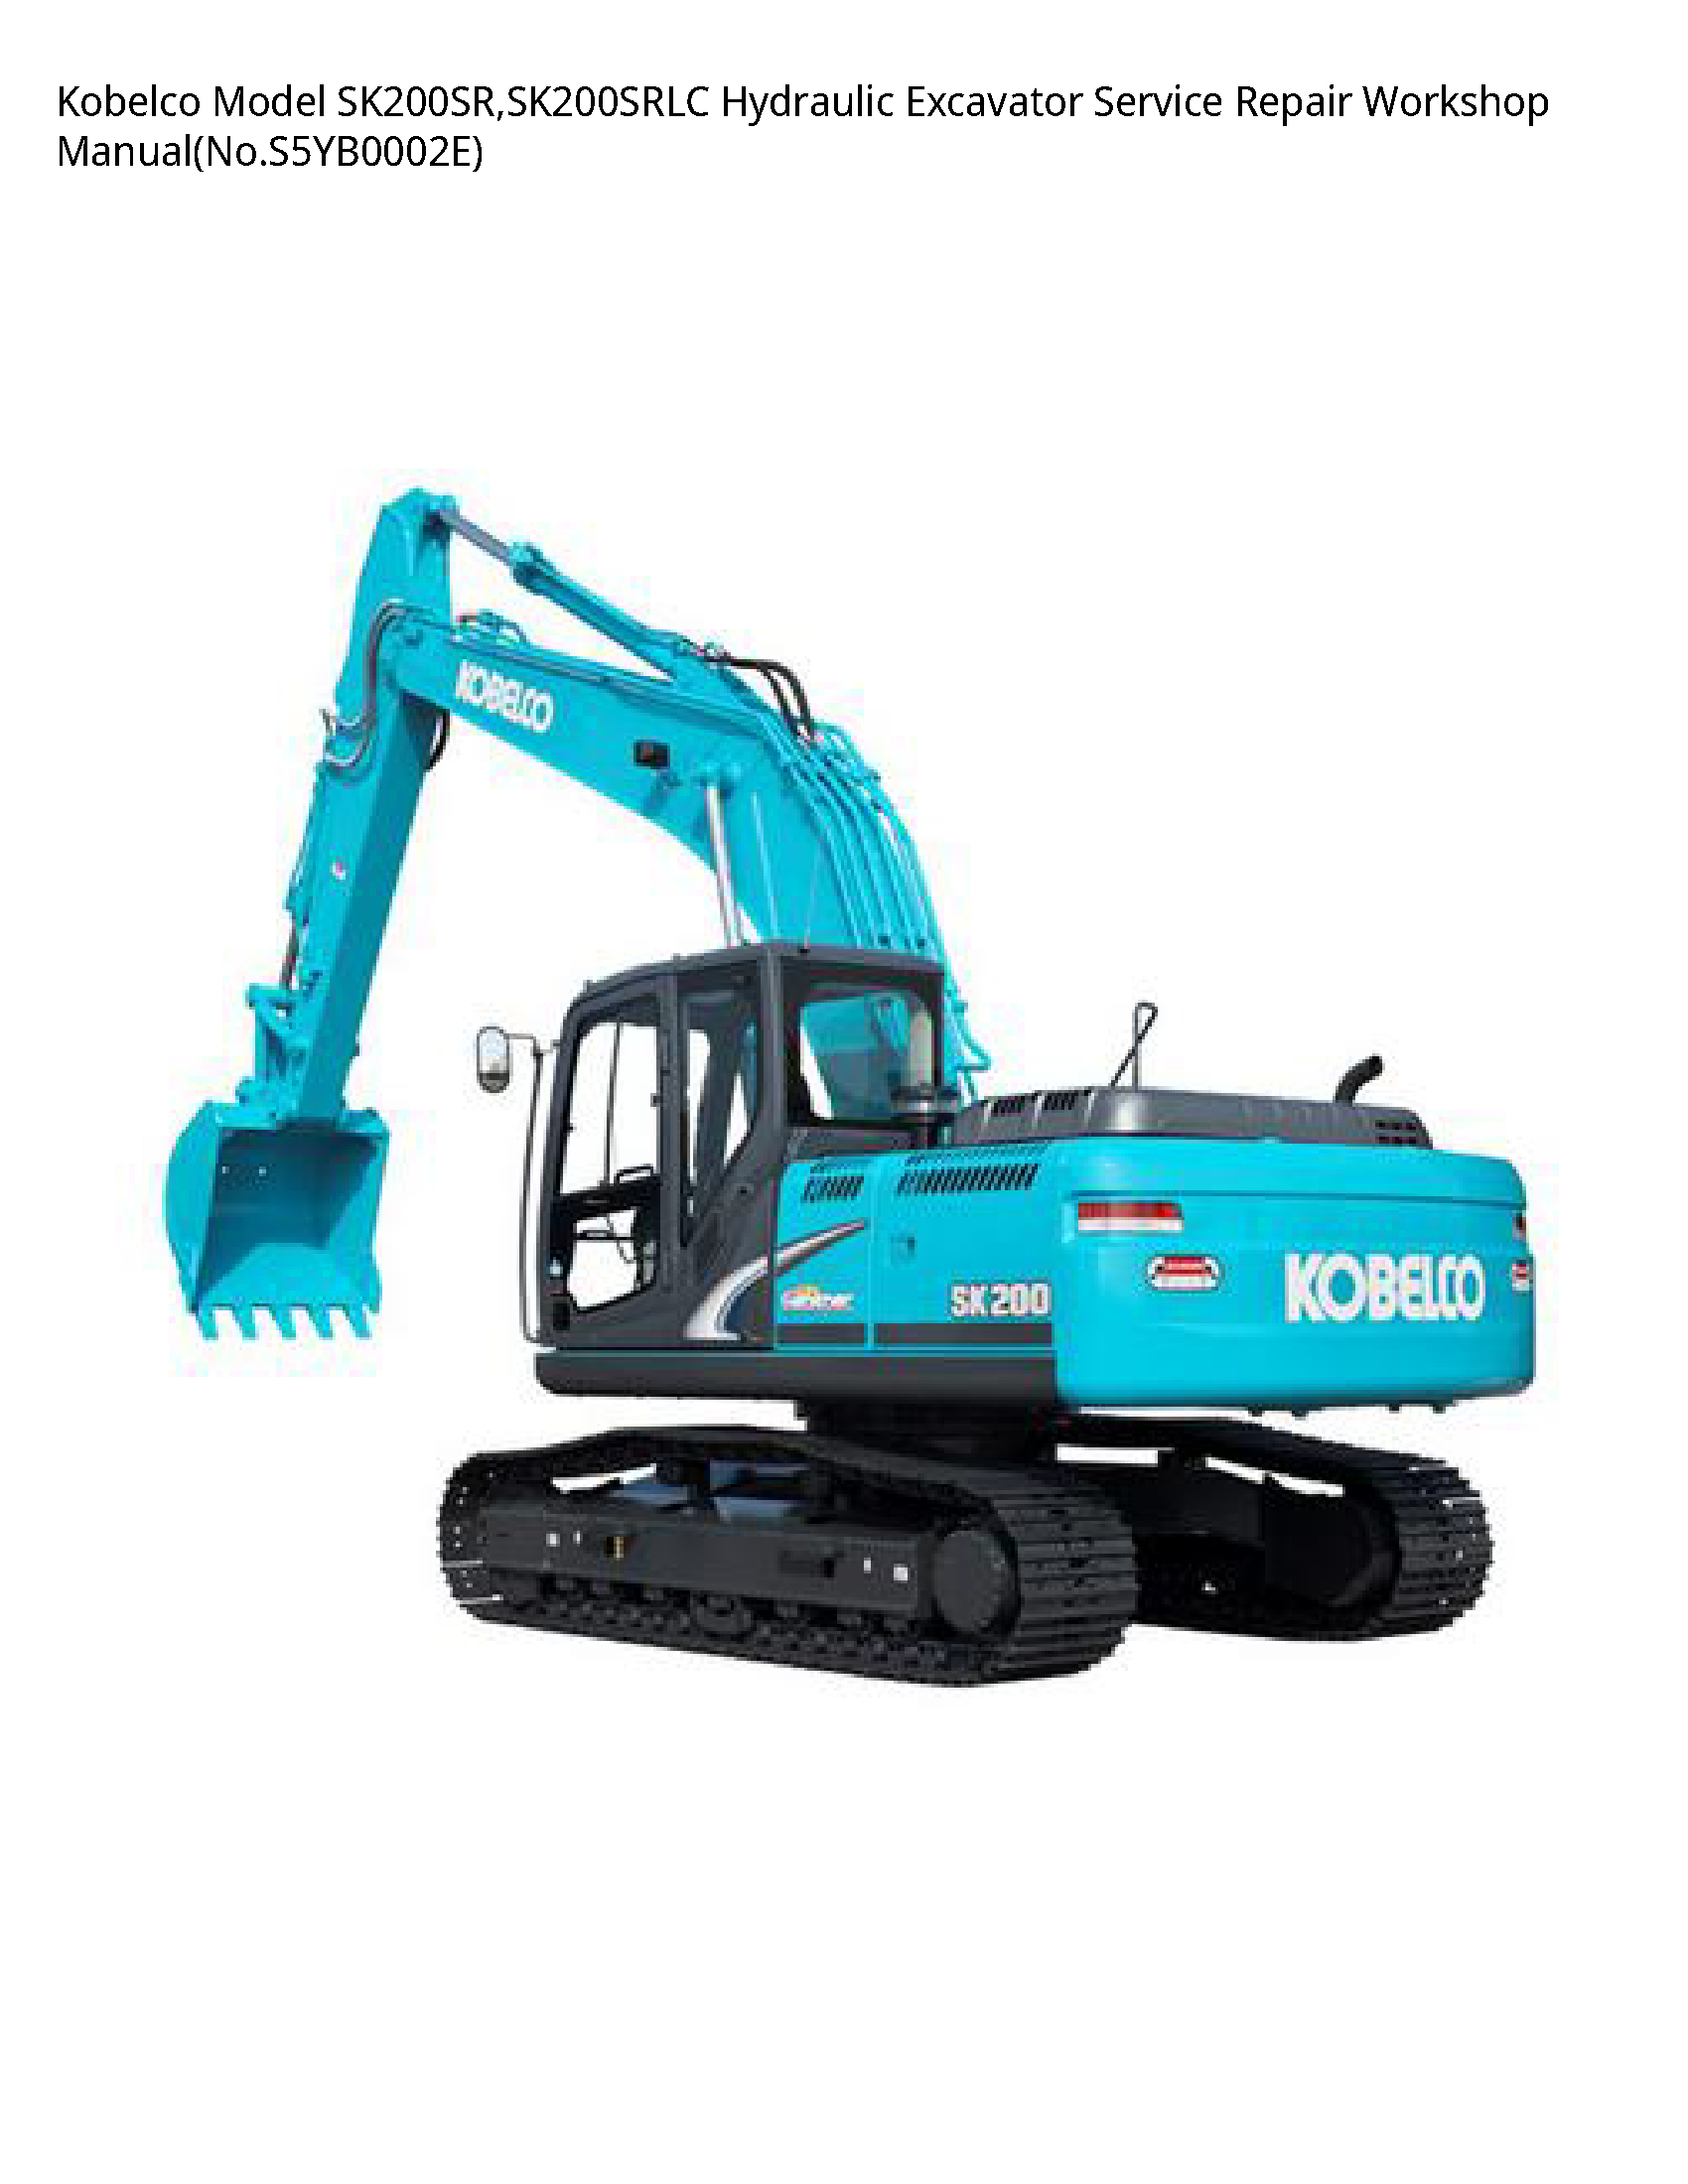 Kobelco SK200SR Model Hydraulic Excavator manual